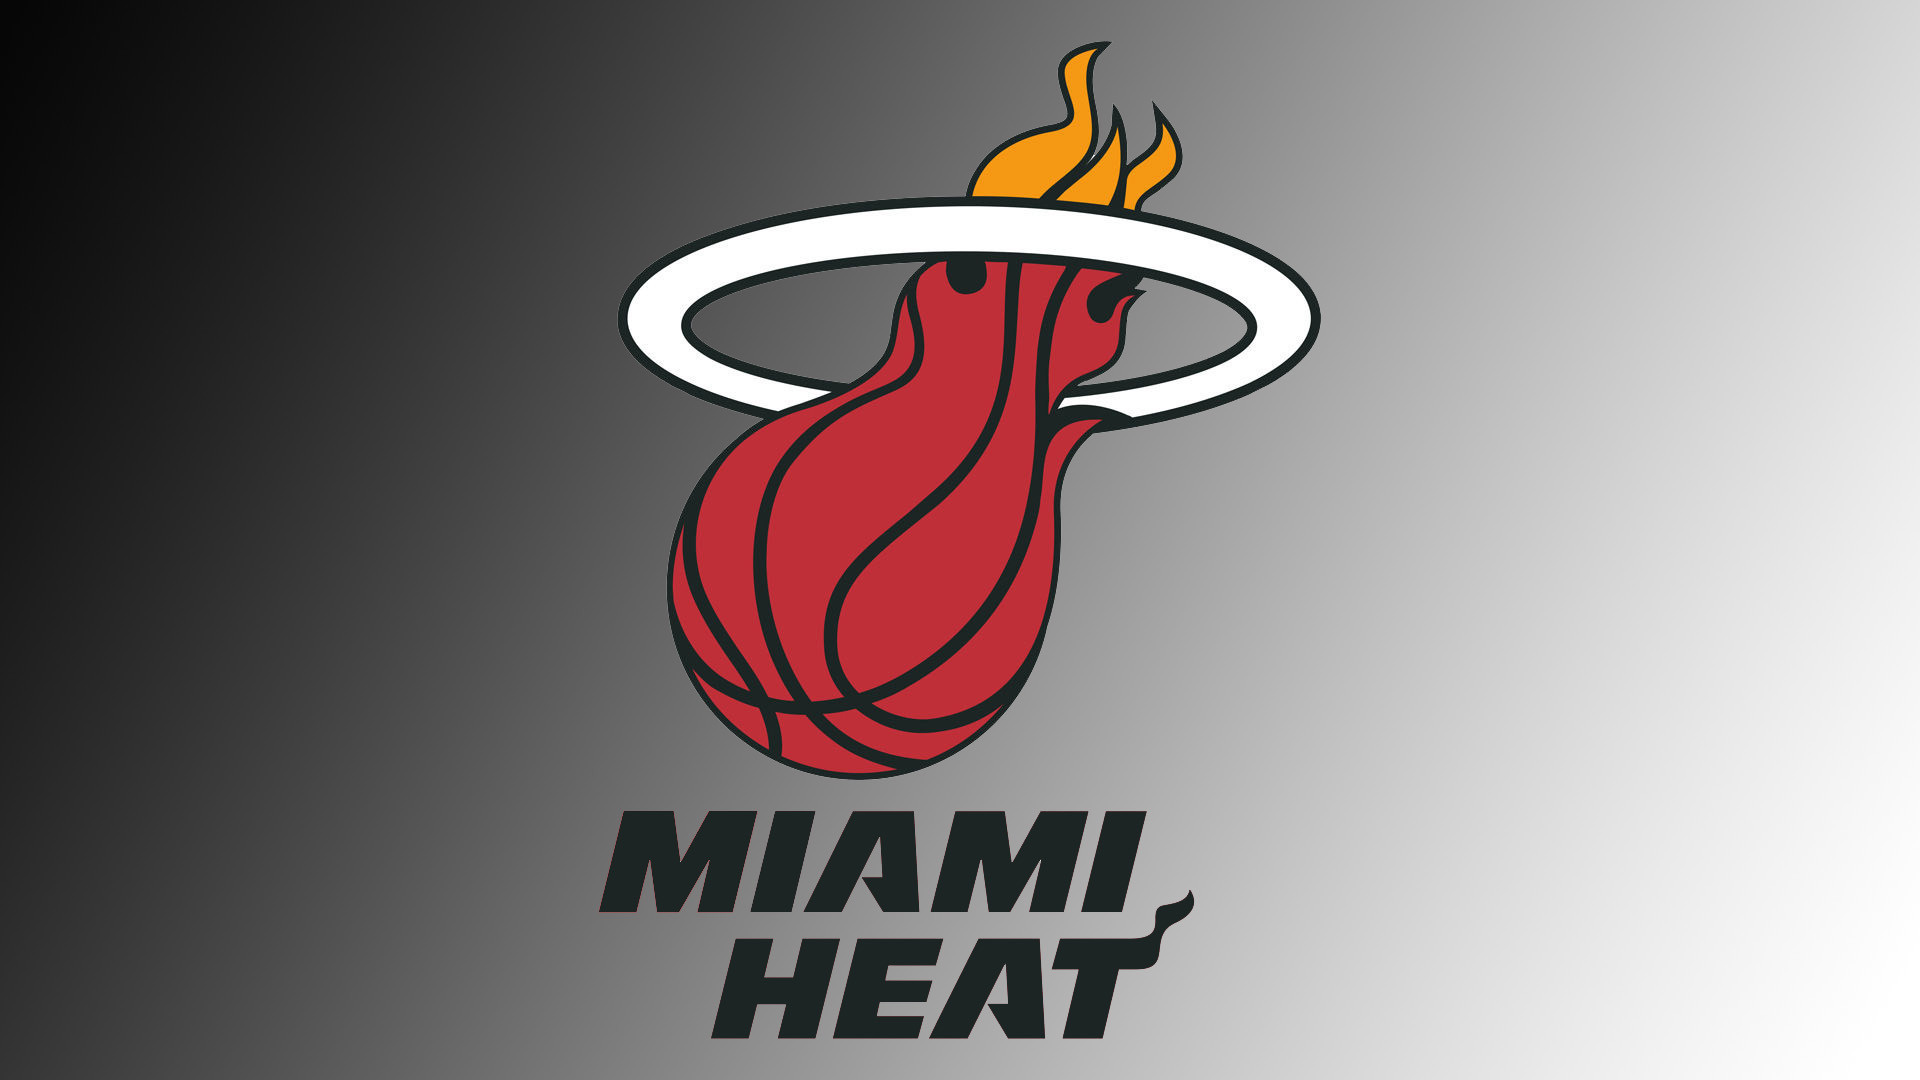 Miami Heat Logo Wallpaper 2018 (70+ images)